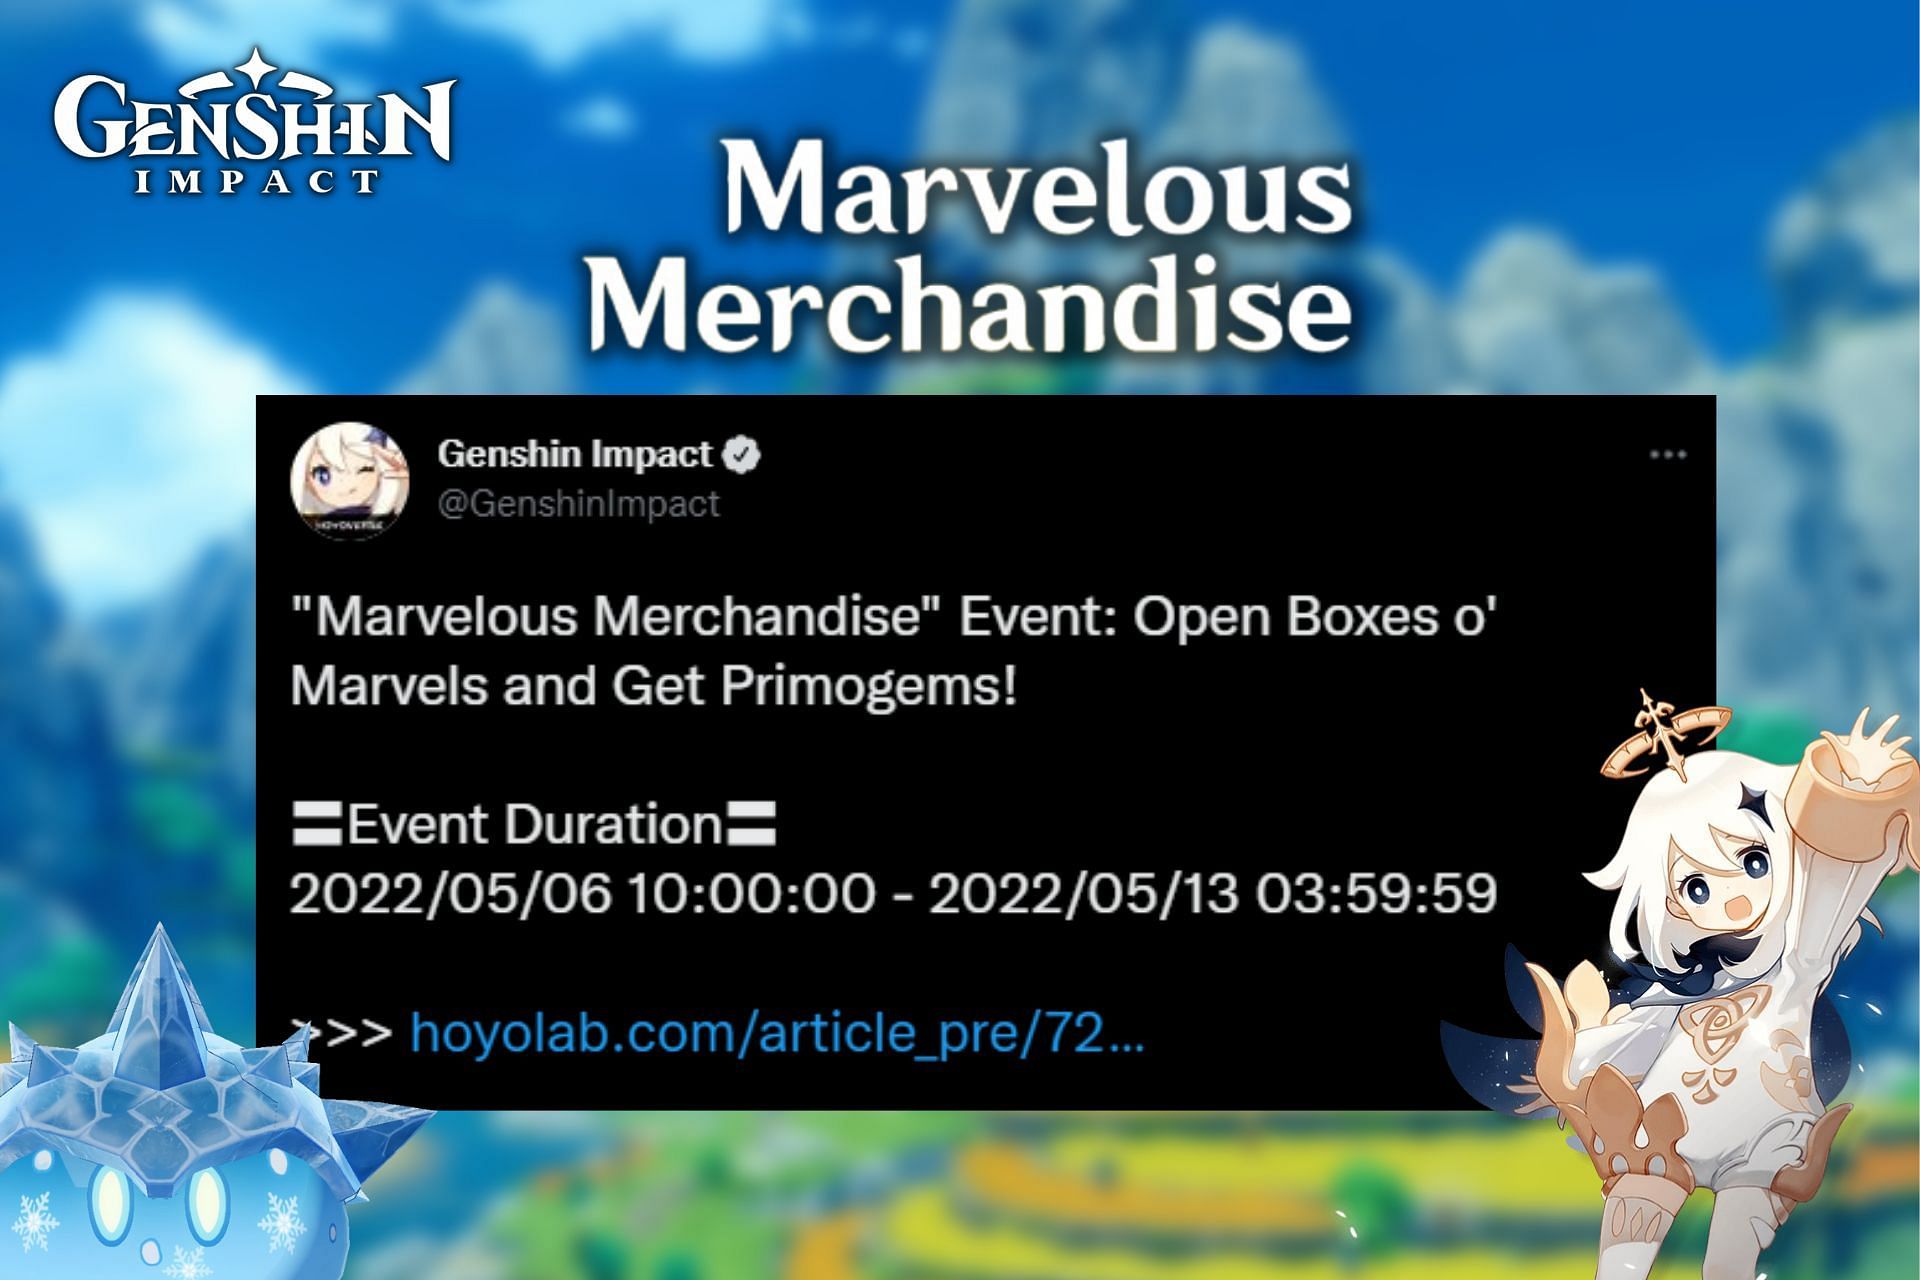 Marvelous Merchandise rerun event (Image via Genshin Impact)